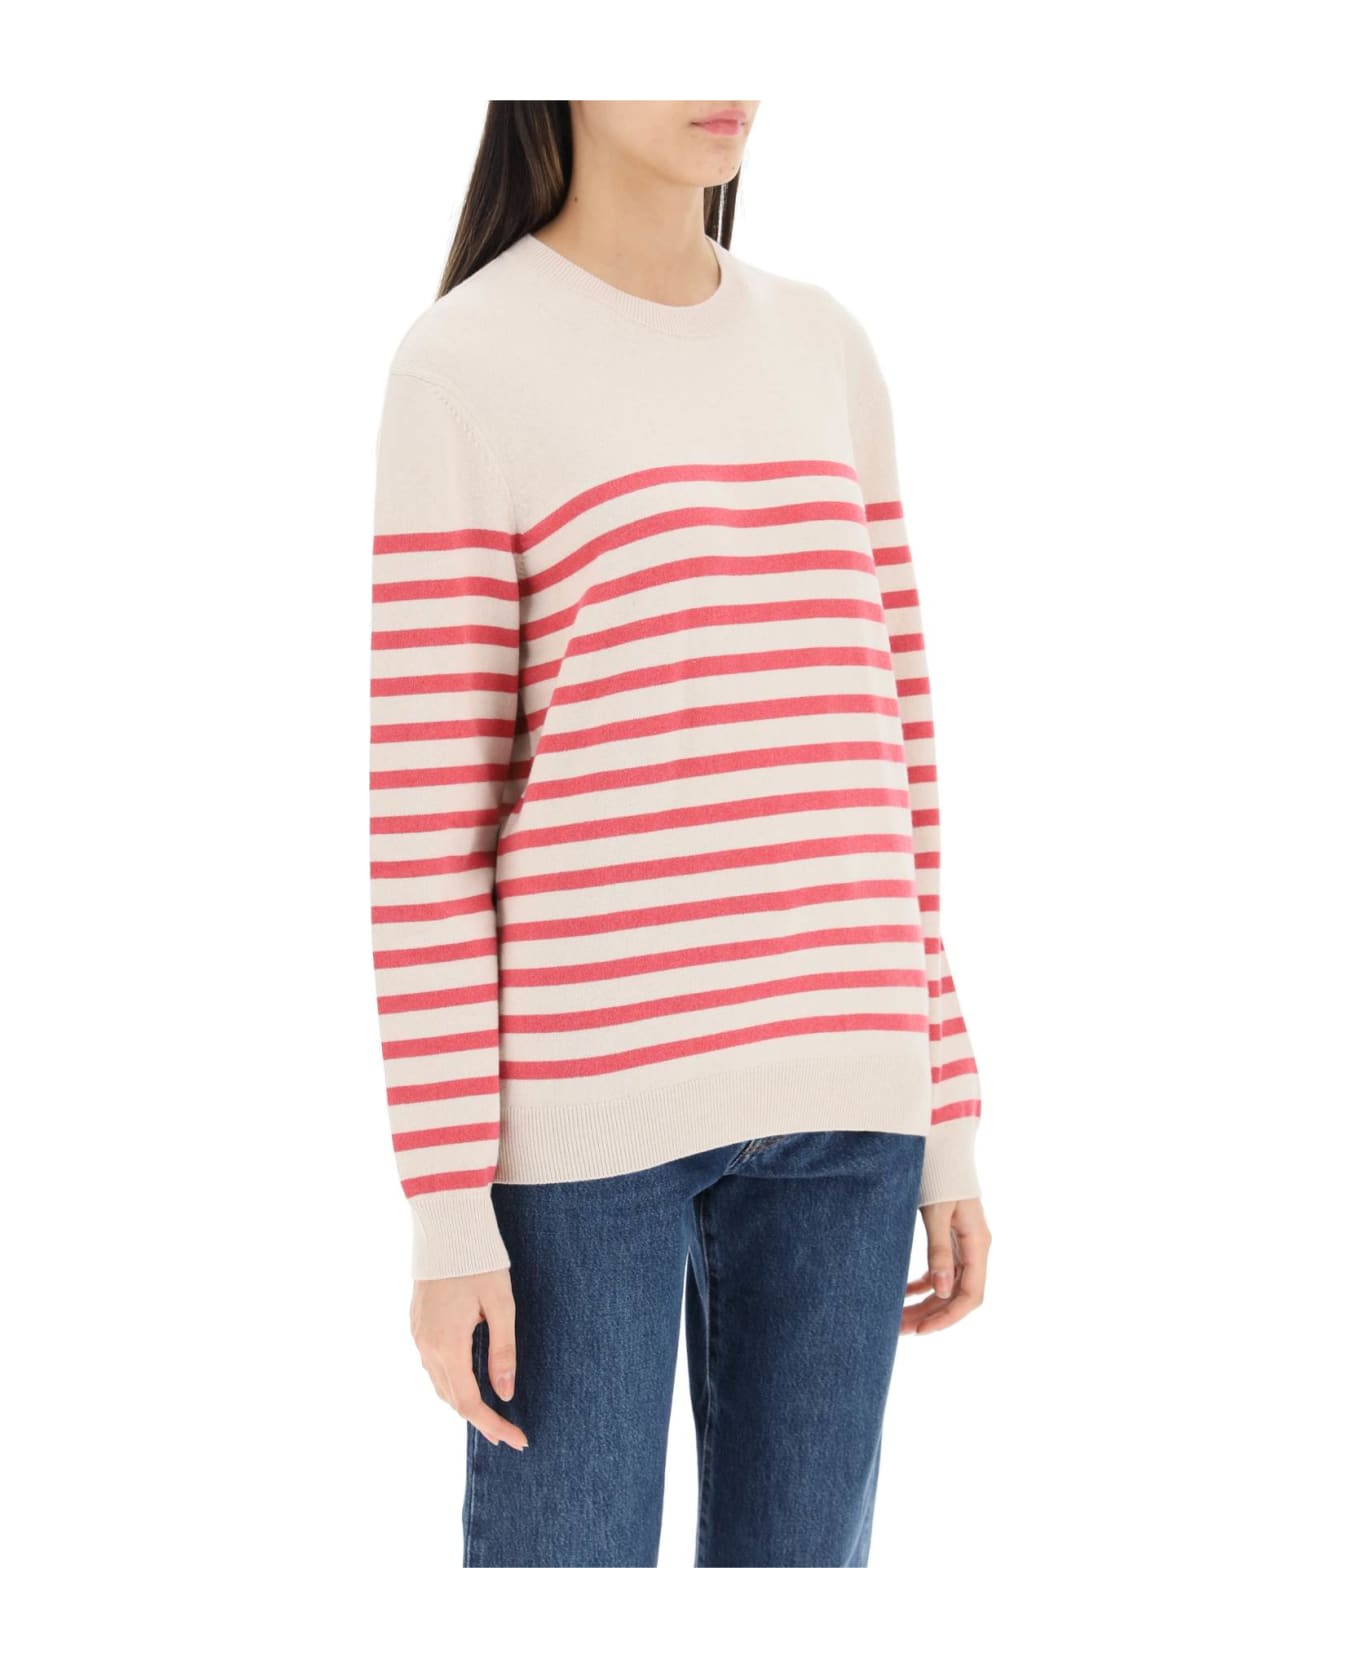 A.P.C. 'phoebe' Striped Cashmere And Cotton Sweater - OFF WHITE FUCSIA